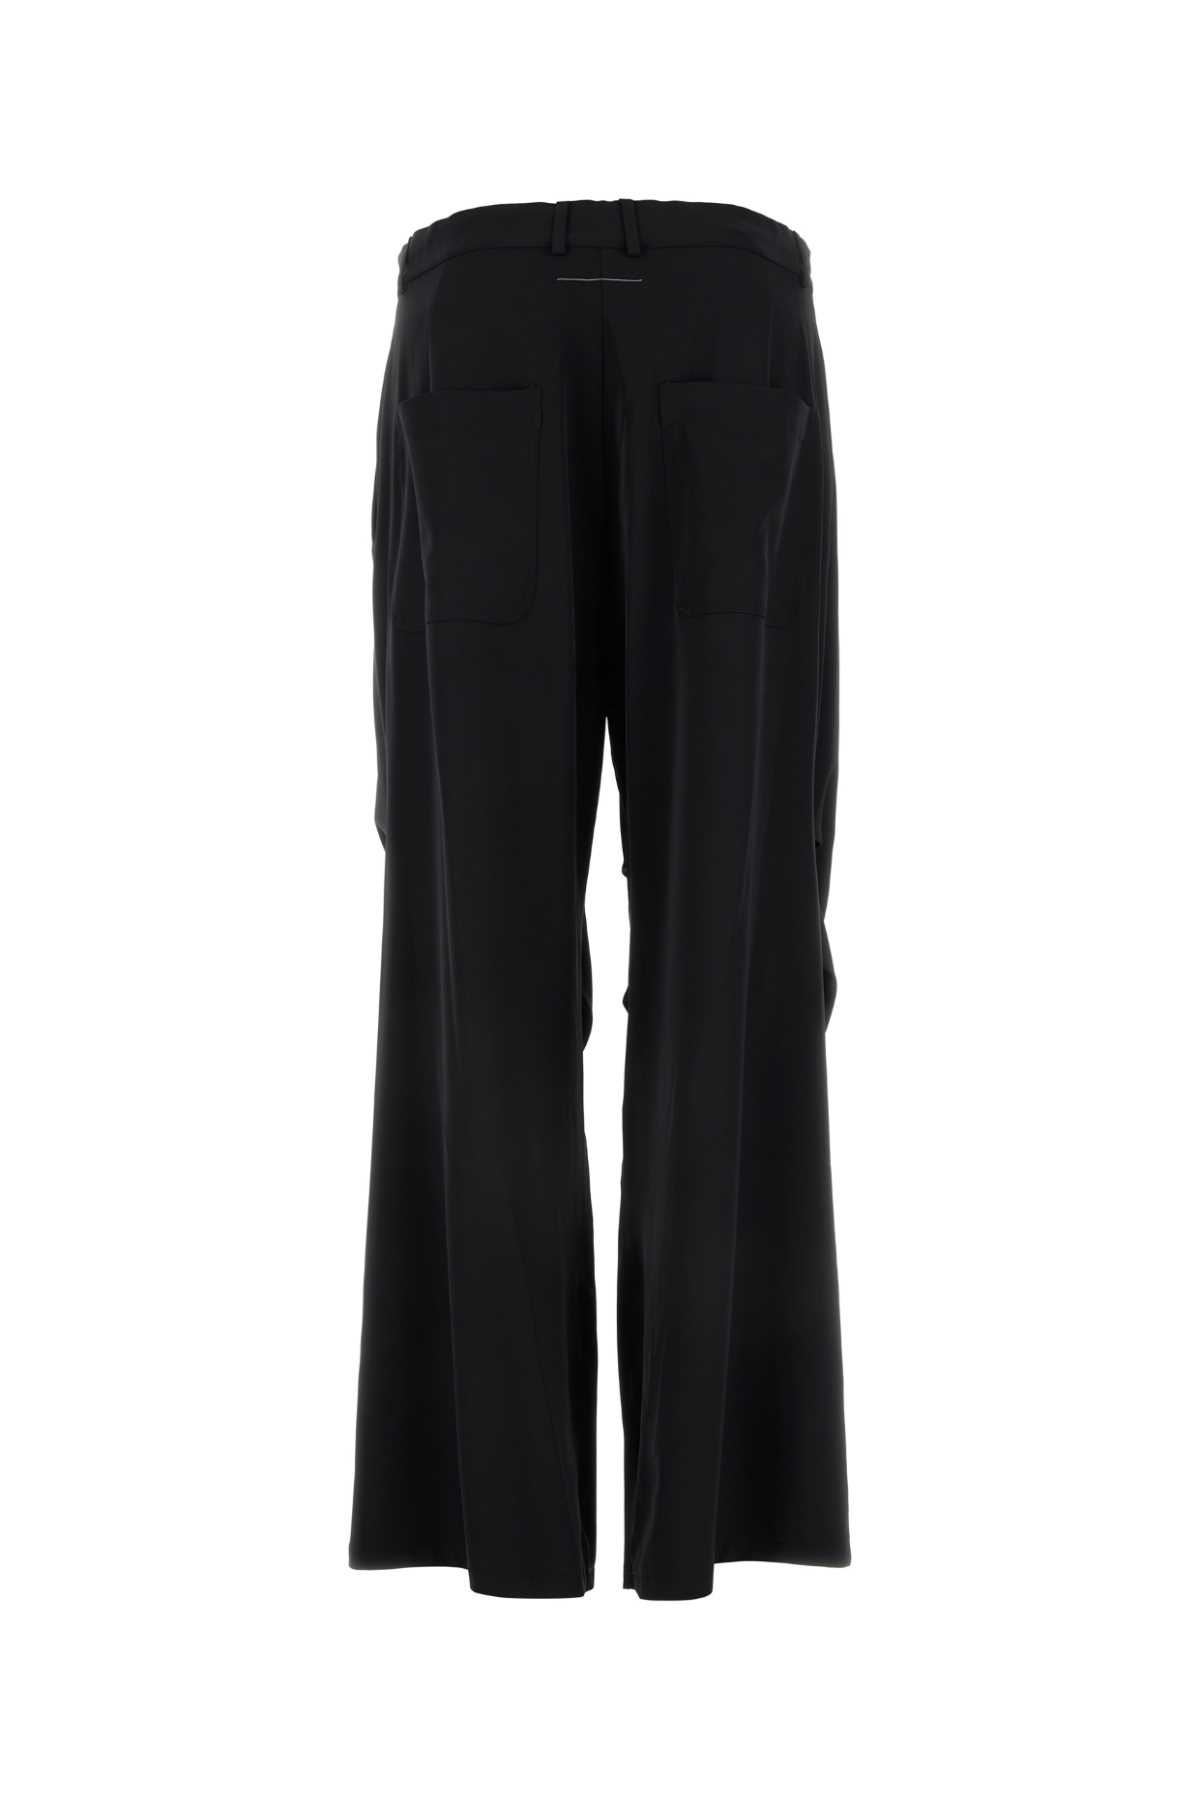 Mm6 Maison Margiela Black Stretch Polyester Wide-leg Pant